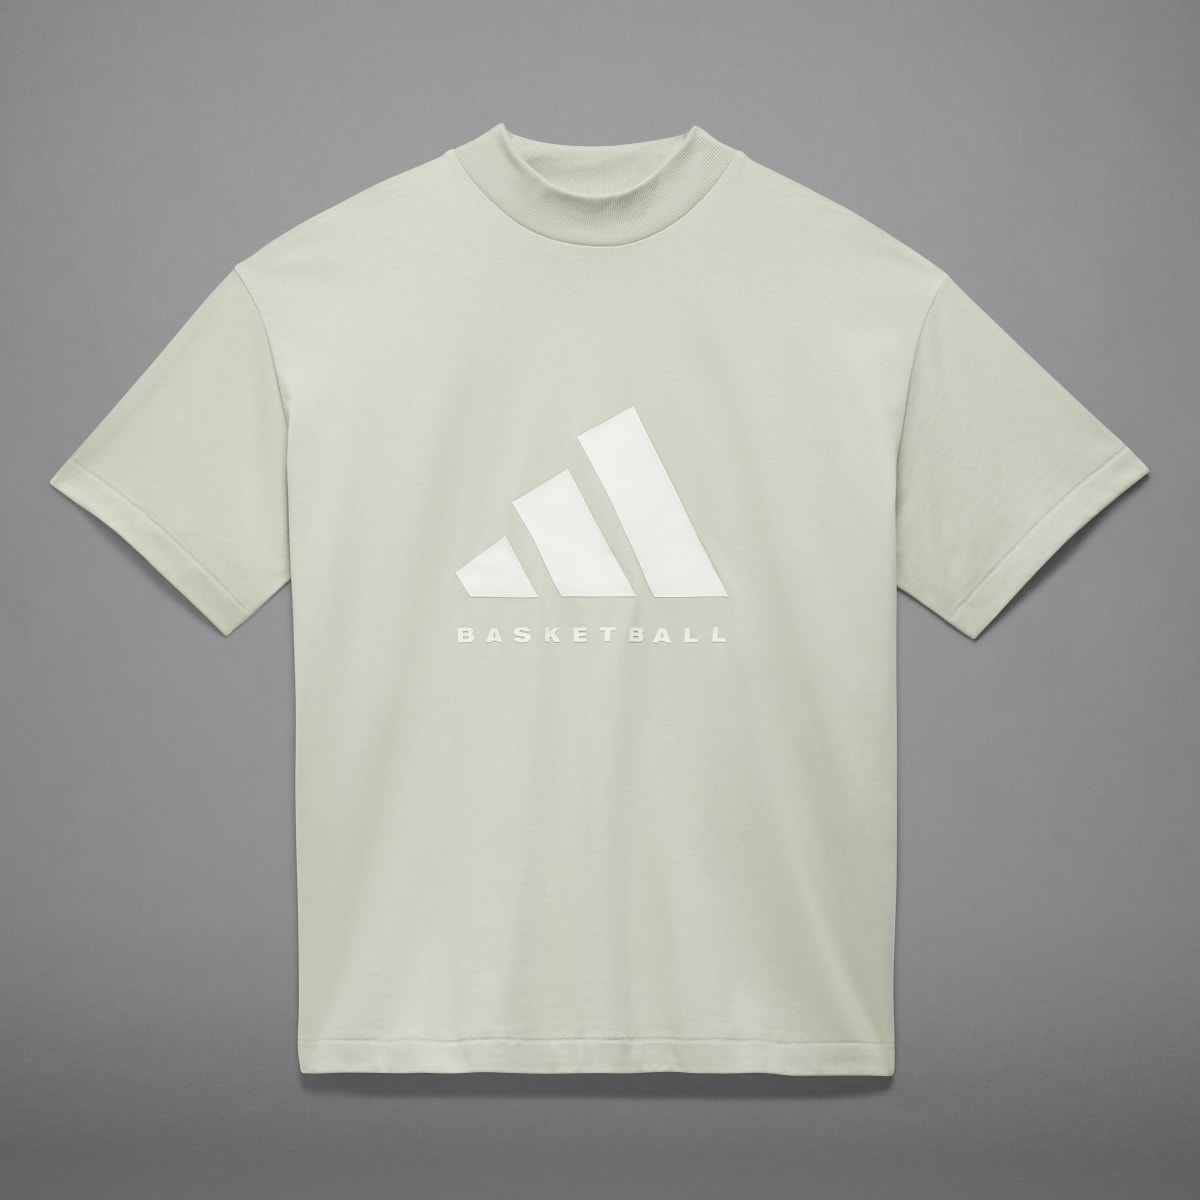 Adidas Basketball T-Shirt. 10